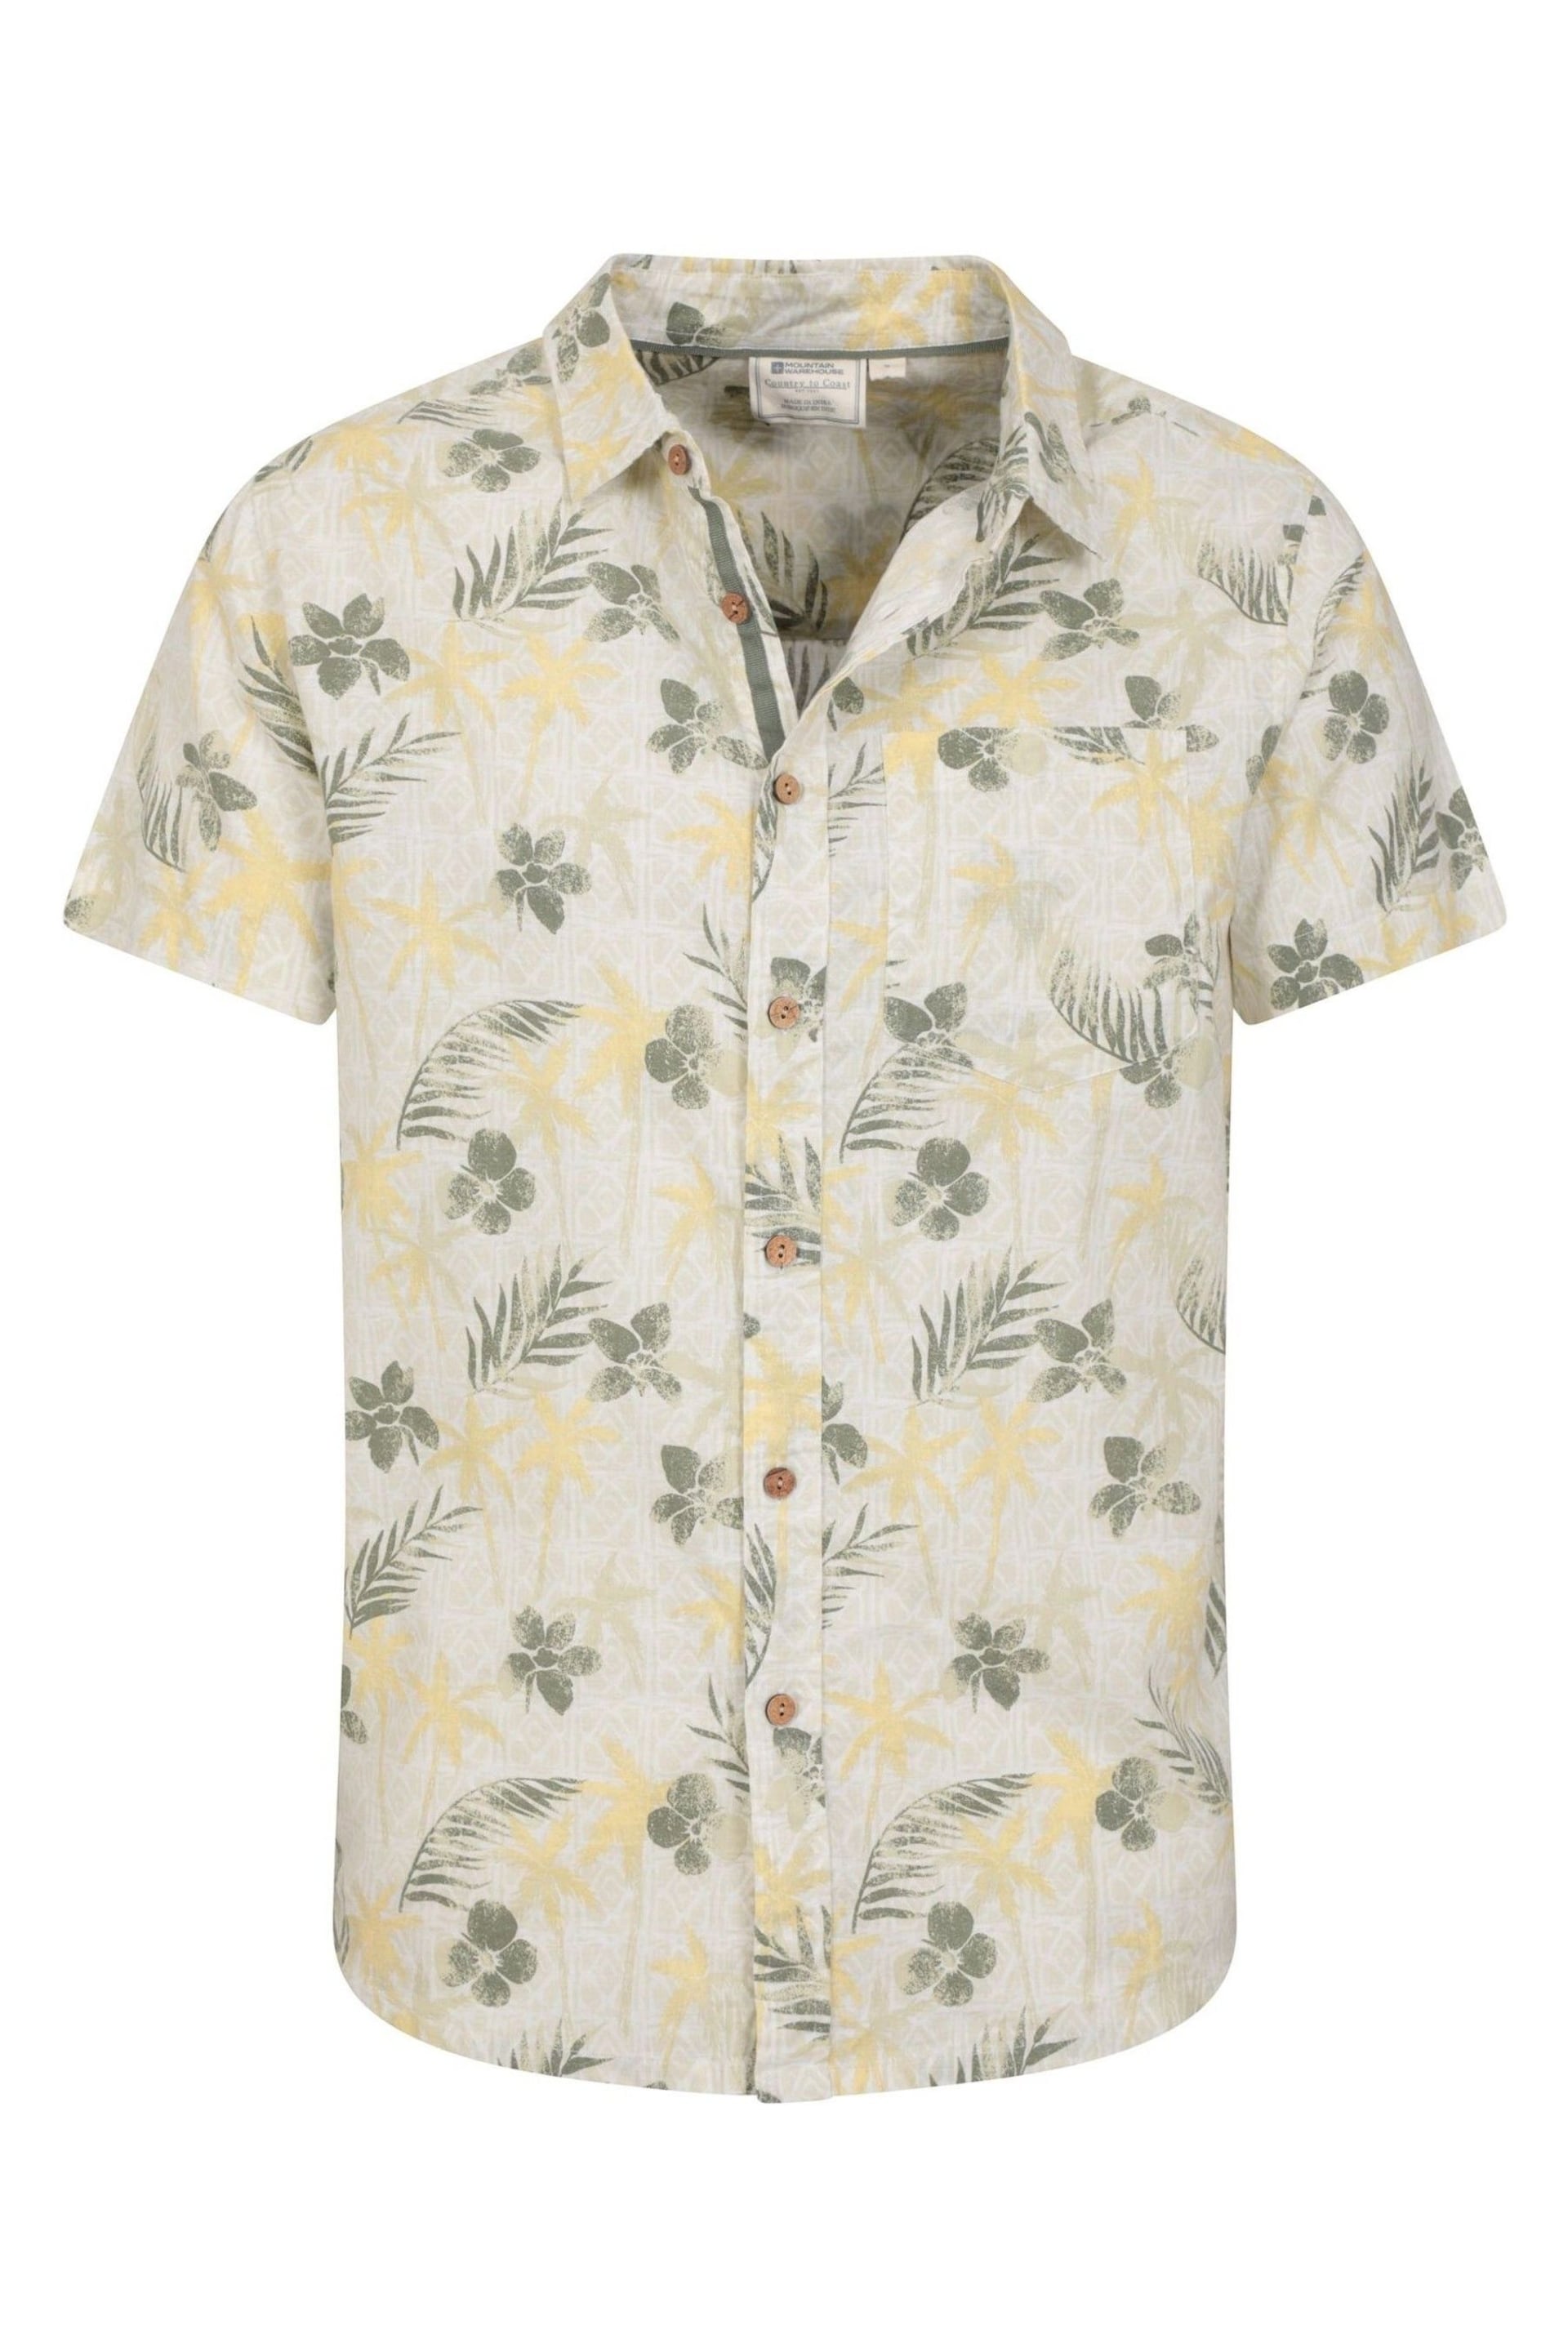 Mountain Warehouse Green Mens Tropical Printed Short Sleeved Shirt - Image 5 of 5